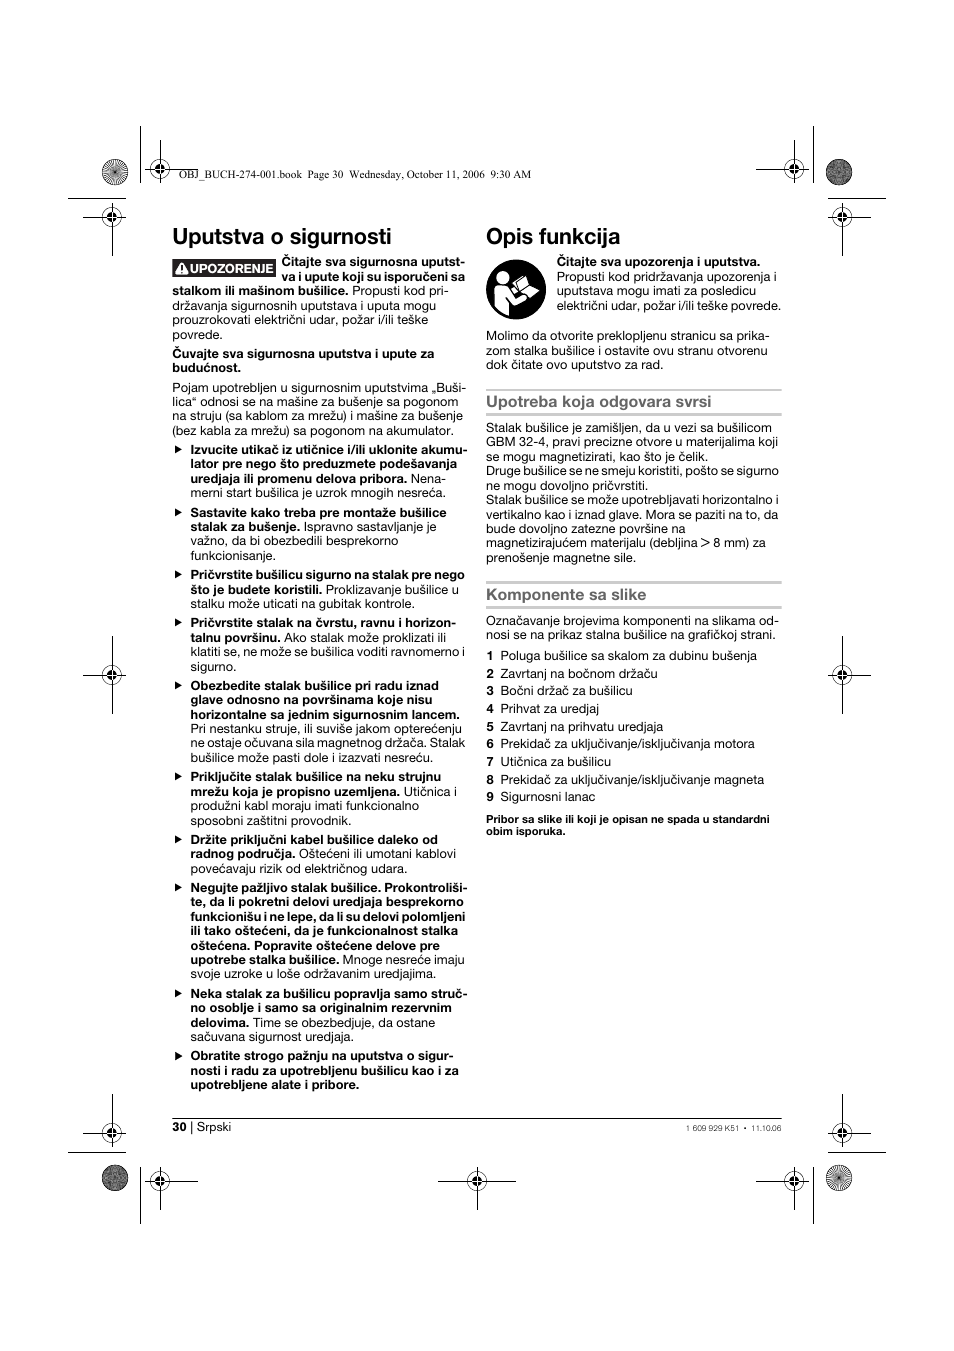 Uputstva o sigurnosti, Opis funkcija | Bosch GMB 32 Professional User  Manual | Page 30 / 48 | Original mode